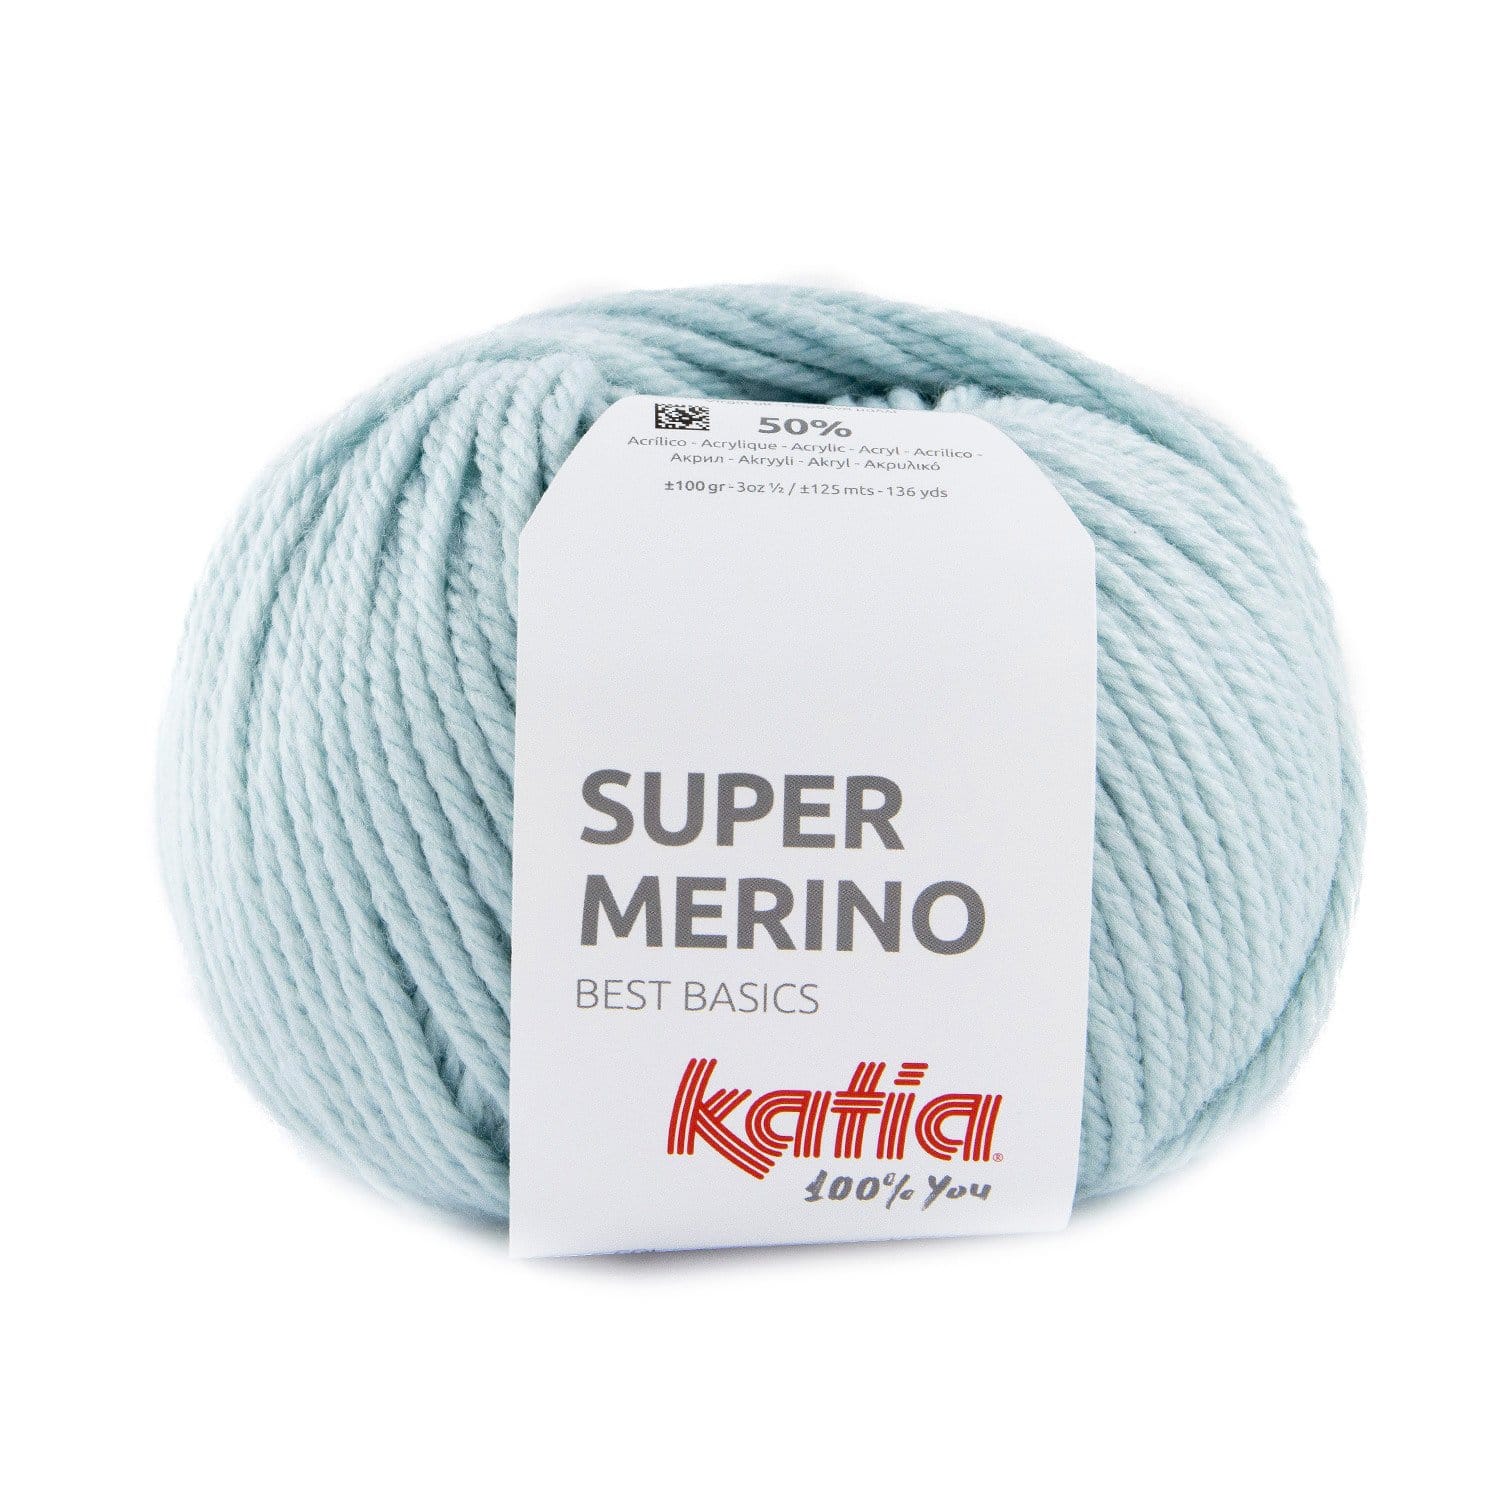 Super Merino - Pelote laine et acrylique - Katia - Les aiguilles